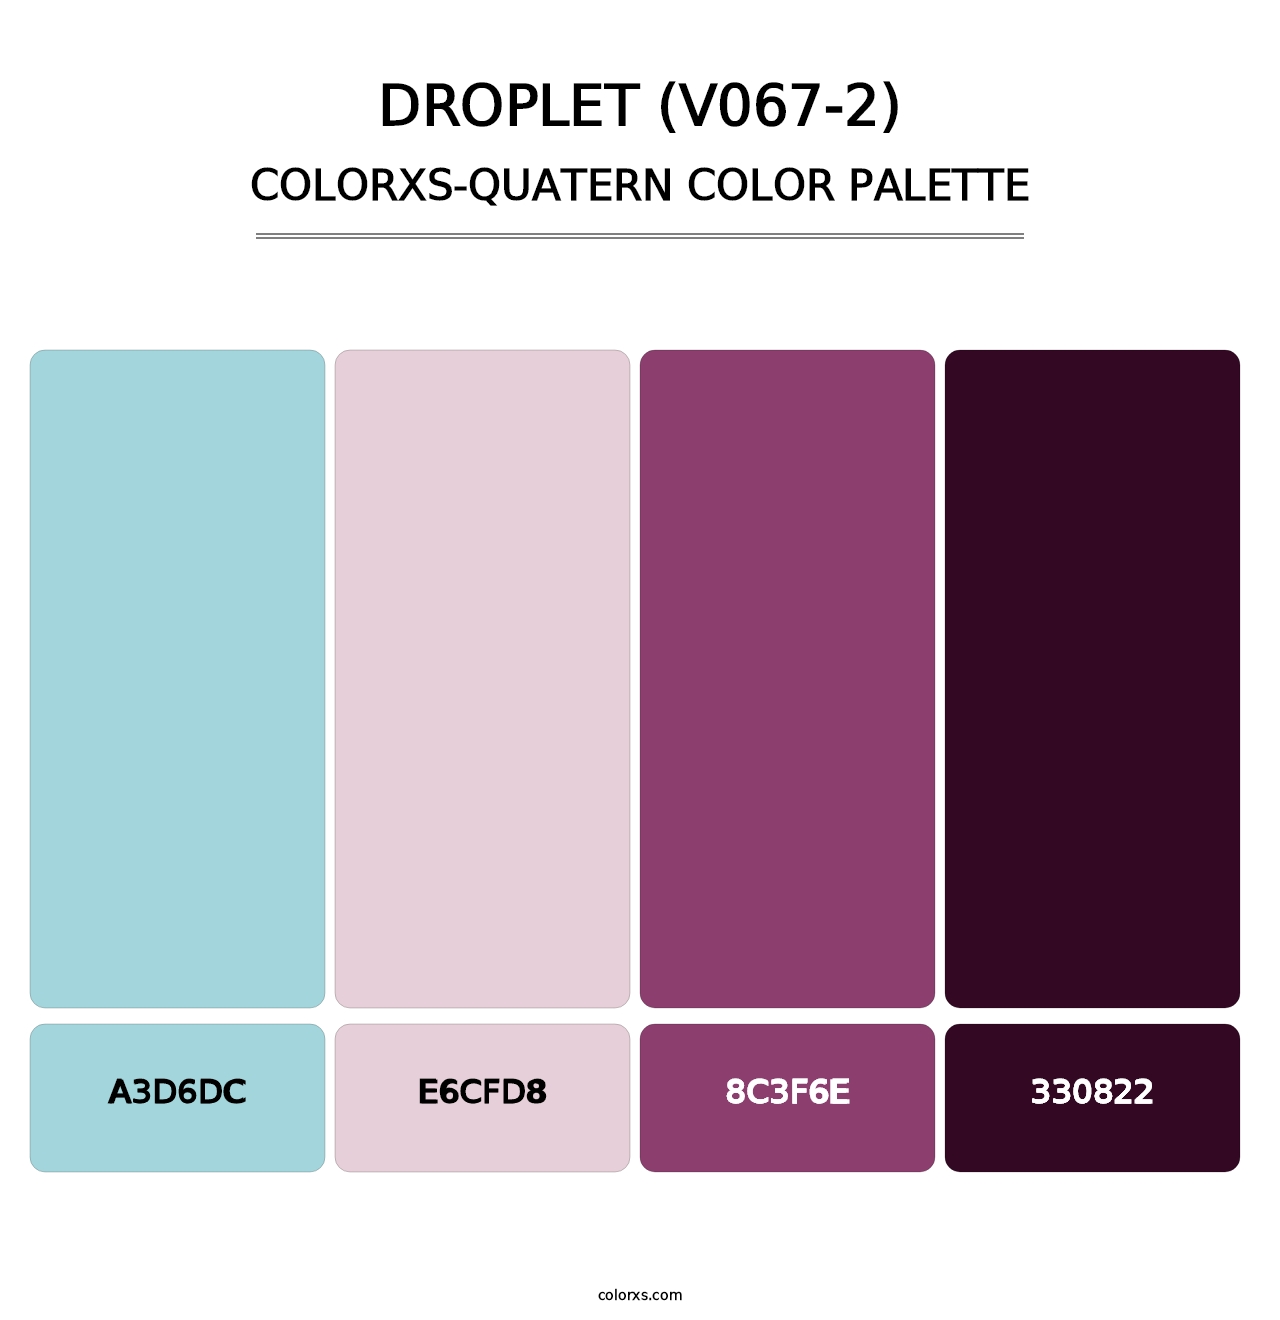 Droplet (V067-2) - Colorxs Quatern Palette